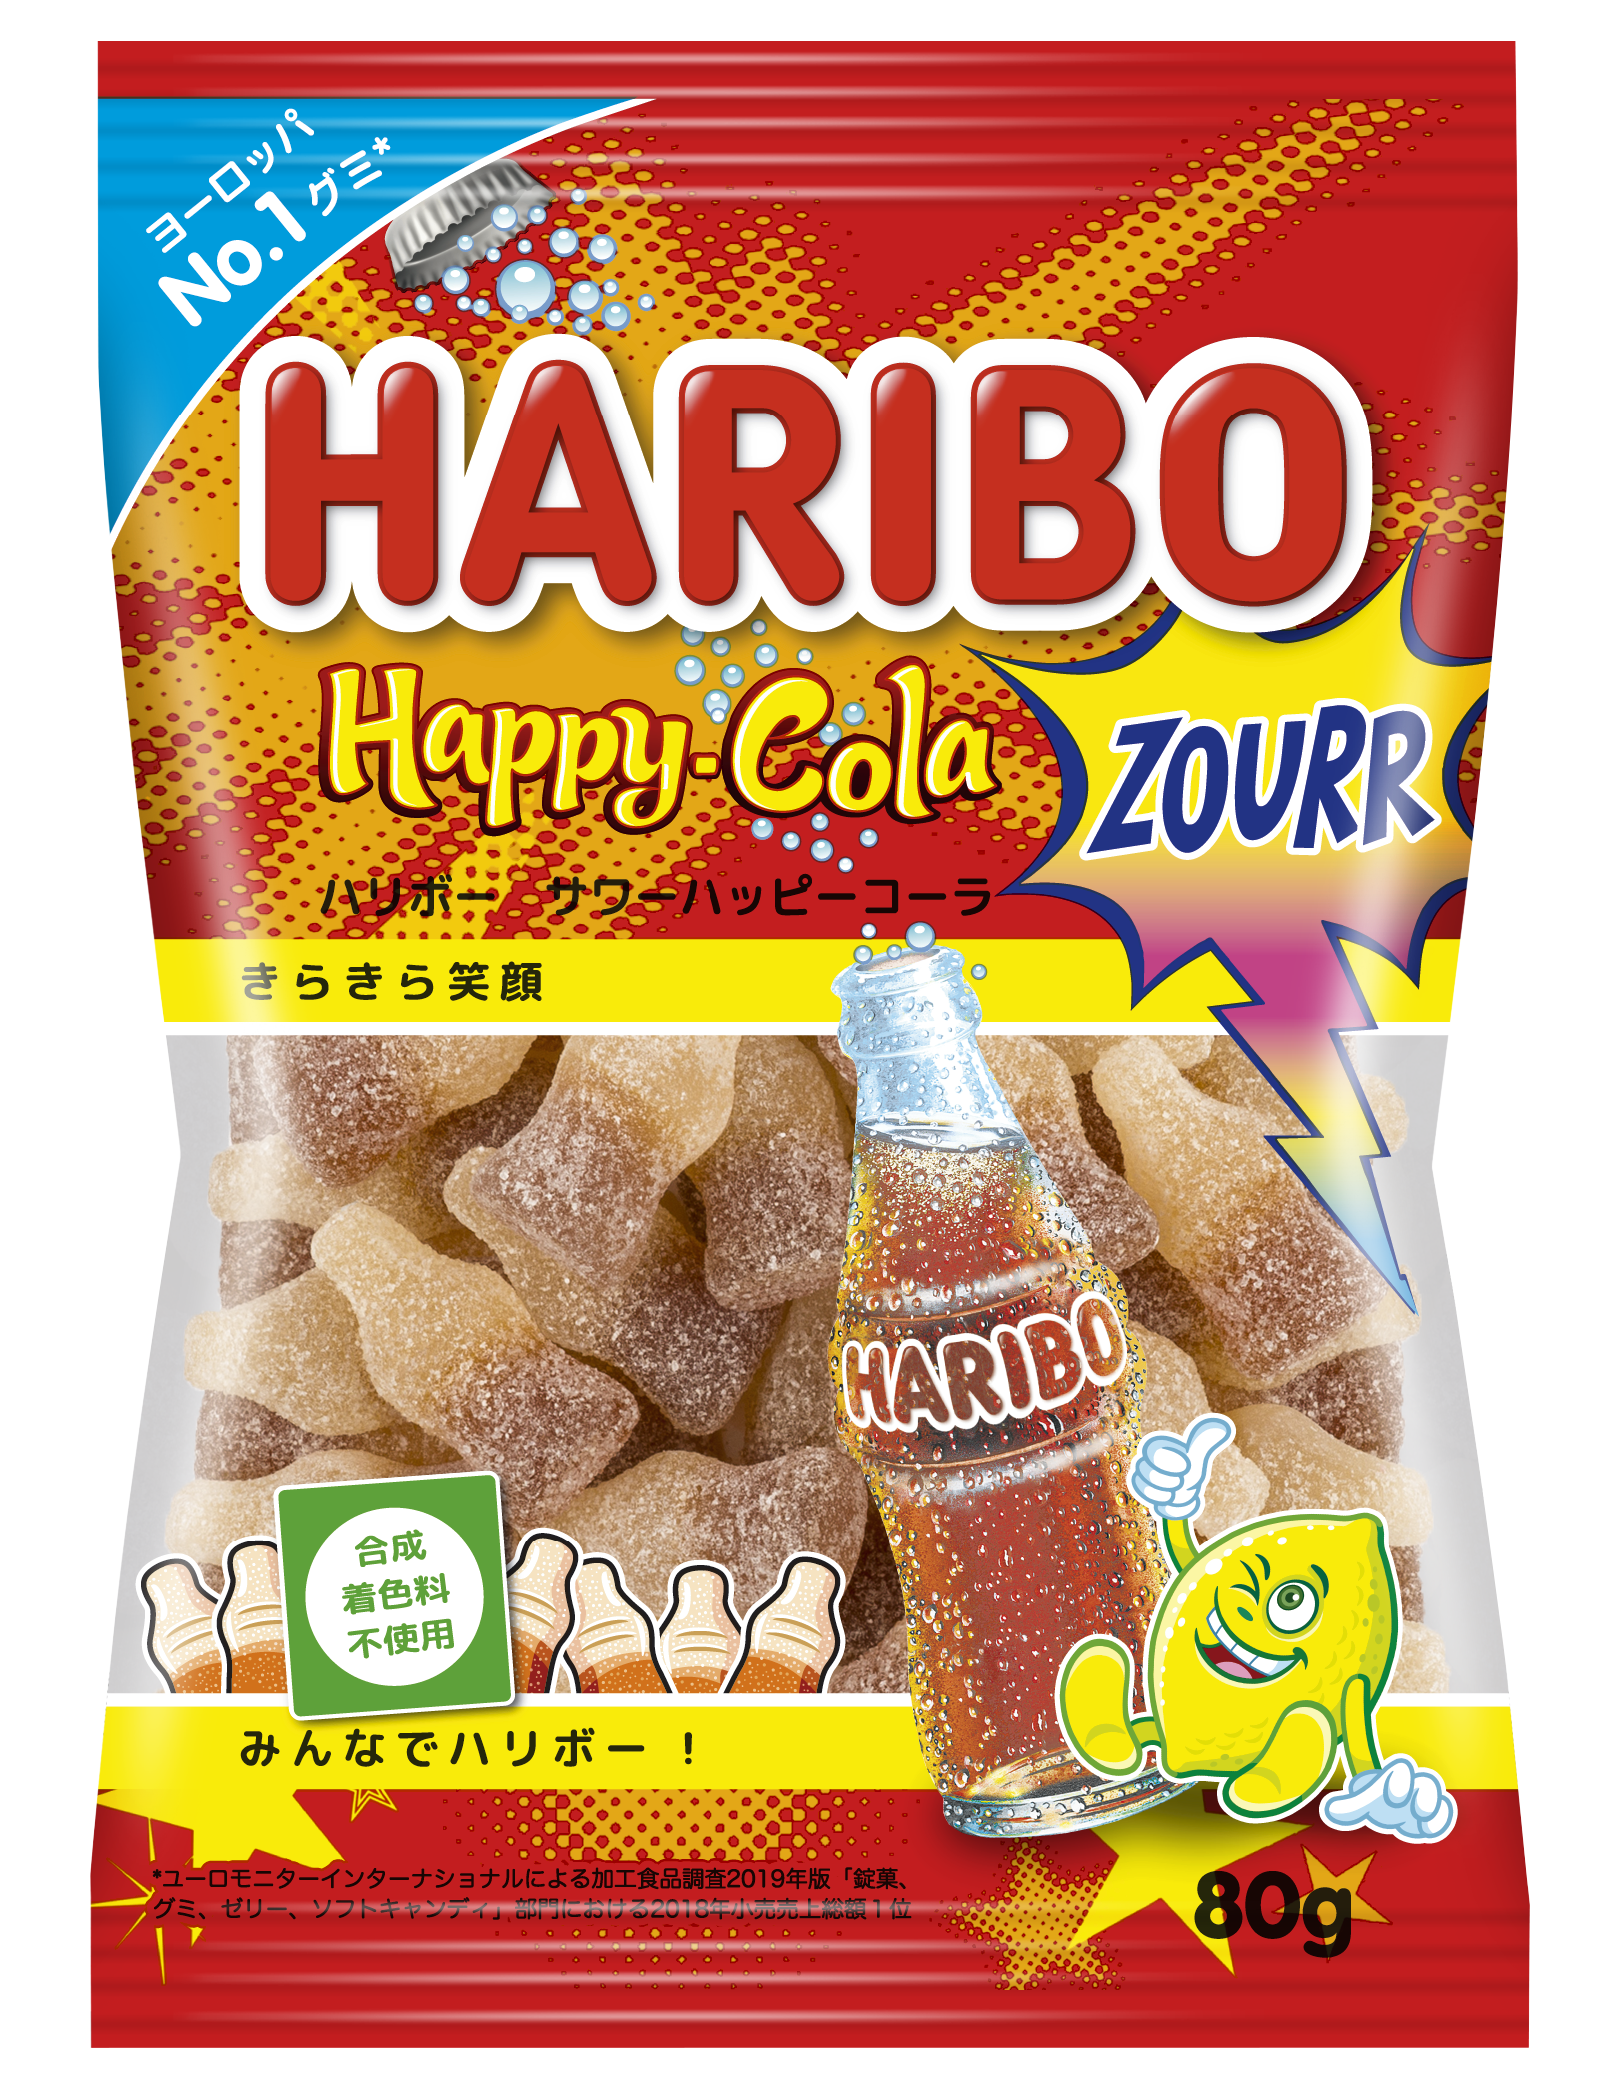 Bag of HARIBO Happy-Cola Zourr